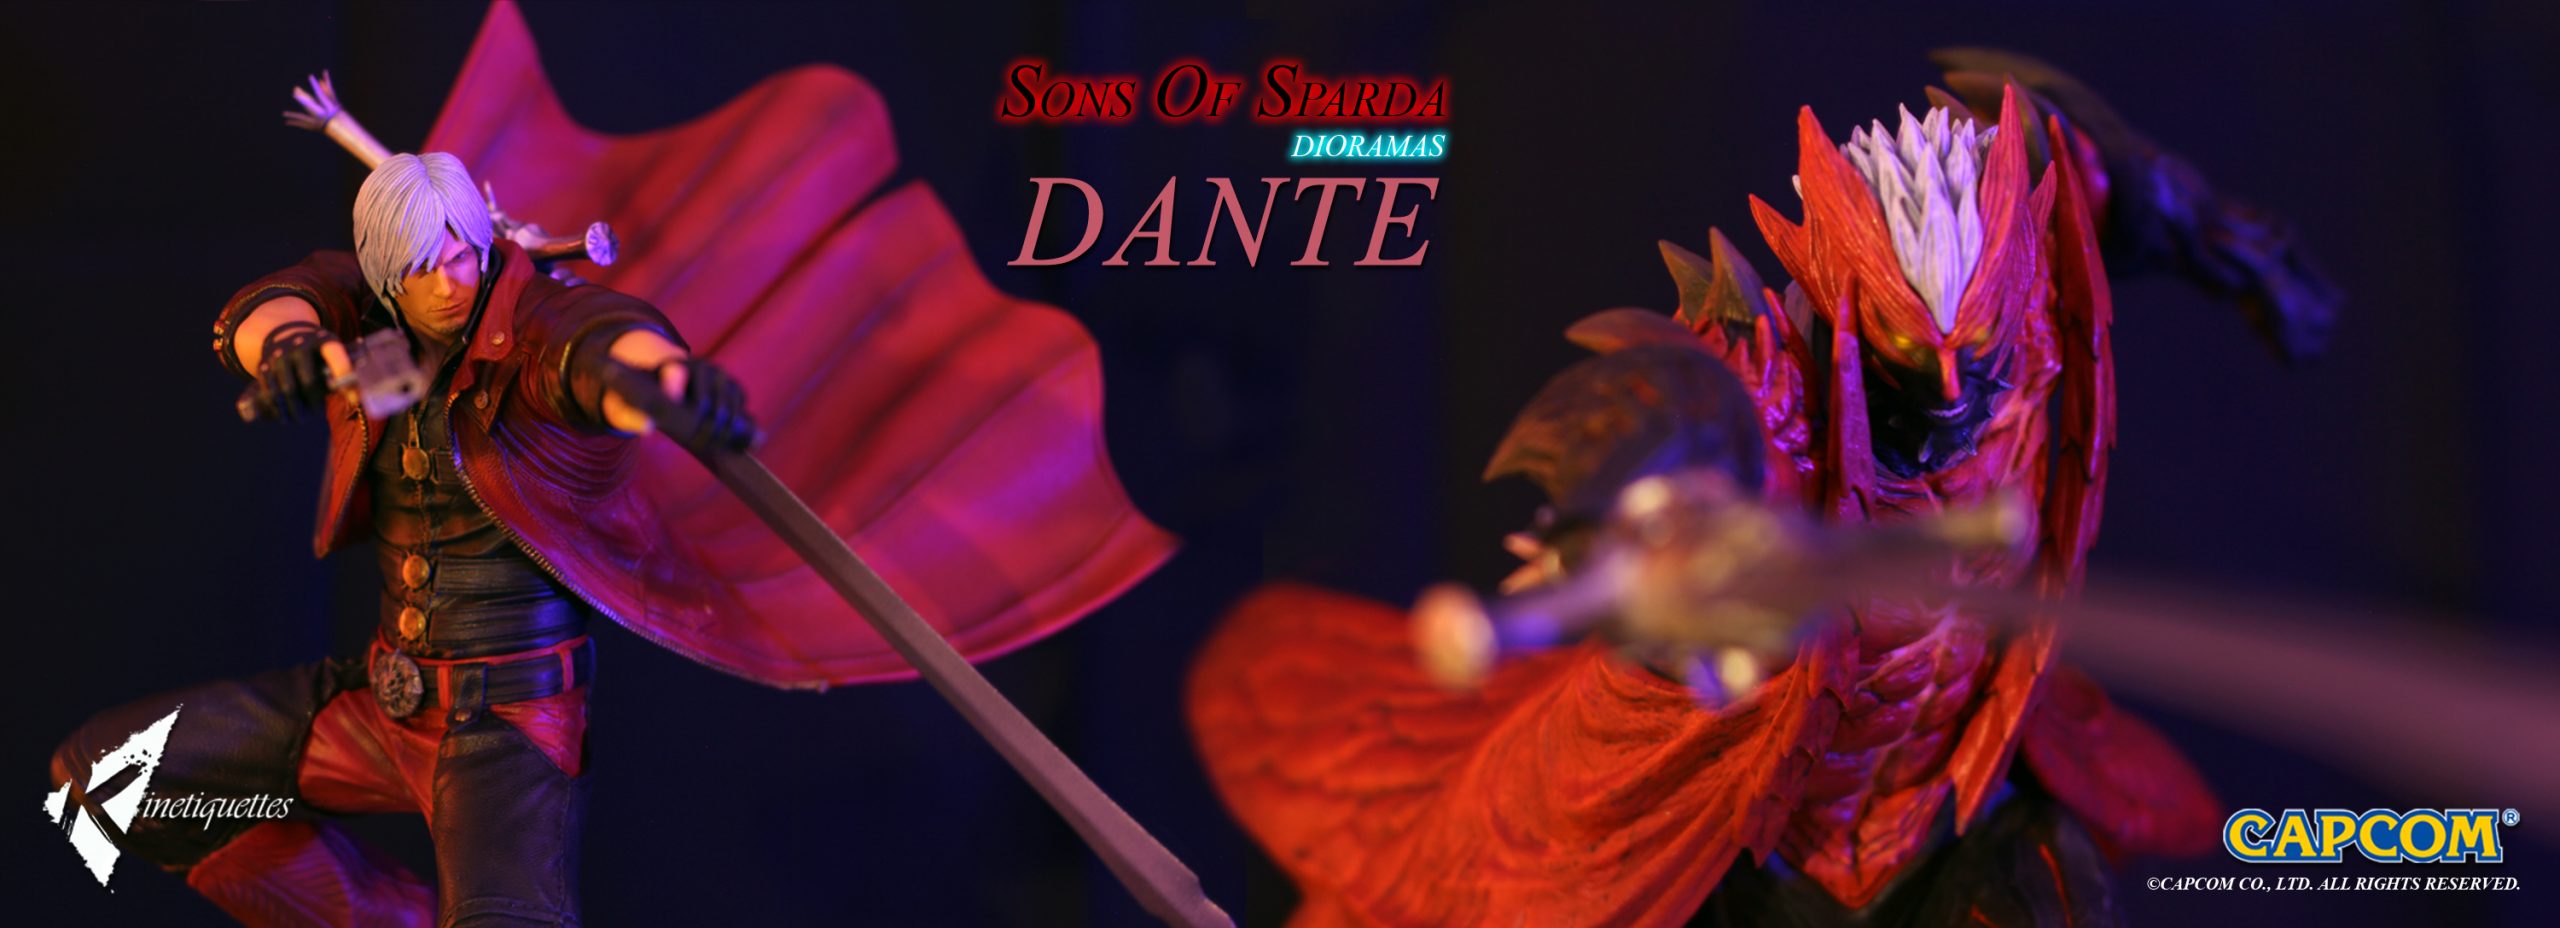 Музыка данте. Спарда девил триггер. Данте песнь 34. Dante son of Sparda.